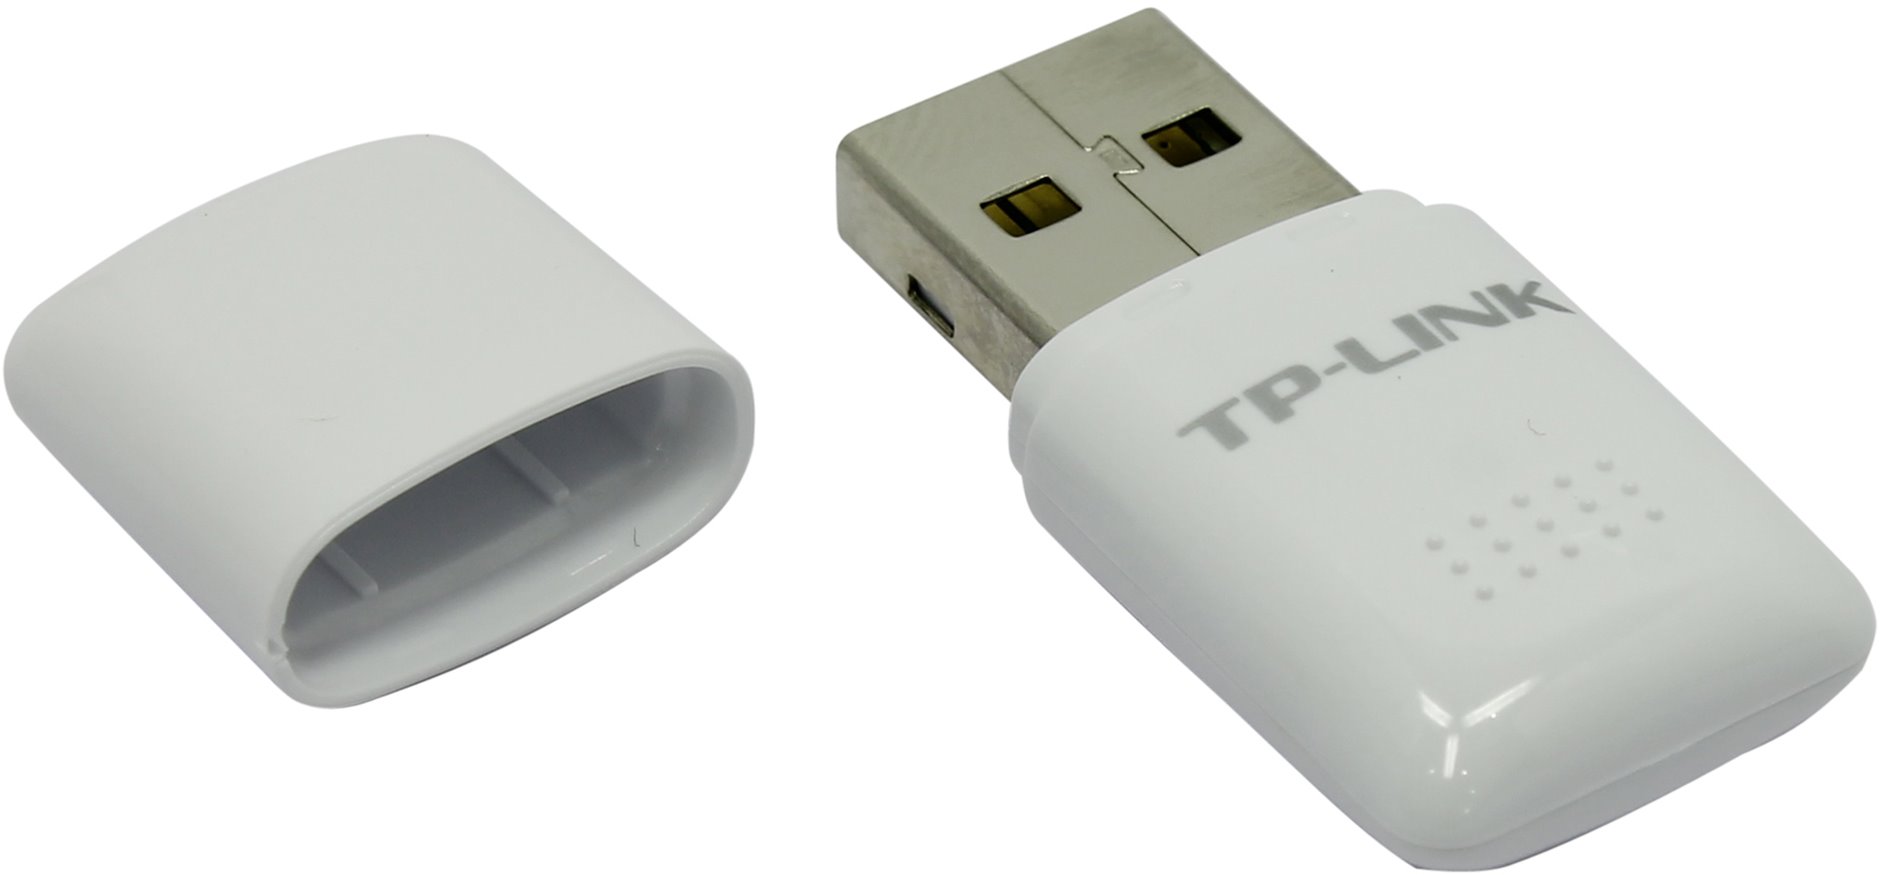 Usb адаптер tl. TP link адаптер wn723n. WIFI адаптер TP-link TL wn723. ТП линк 802.1 USB адаптер. TP-link USB WIFI 802n.